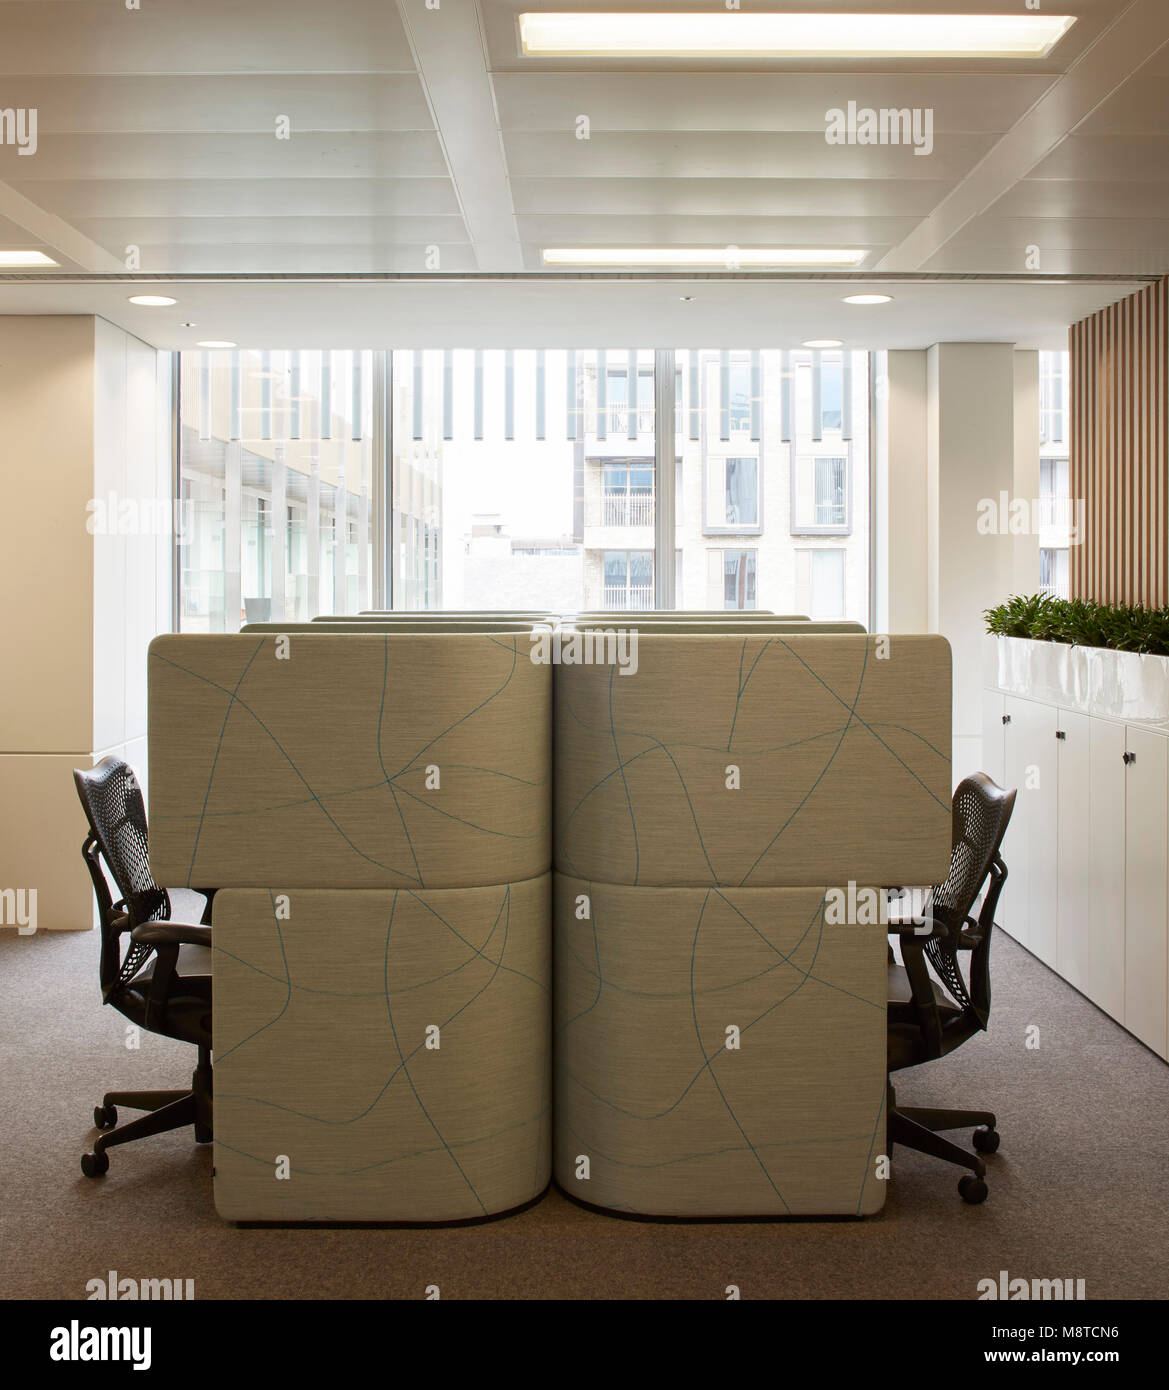 Office desks. Office Interior, London, United Kingdom. Architect: NA, 2017. Stock Photo